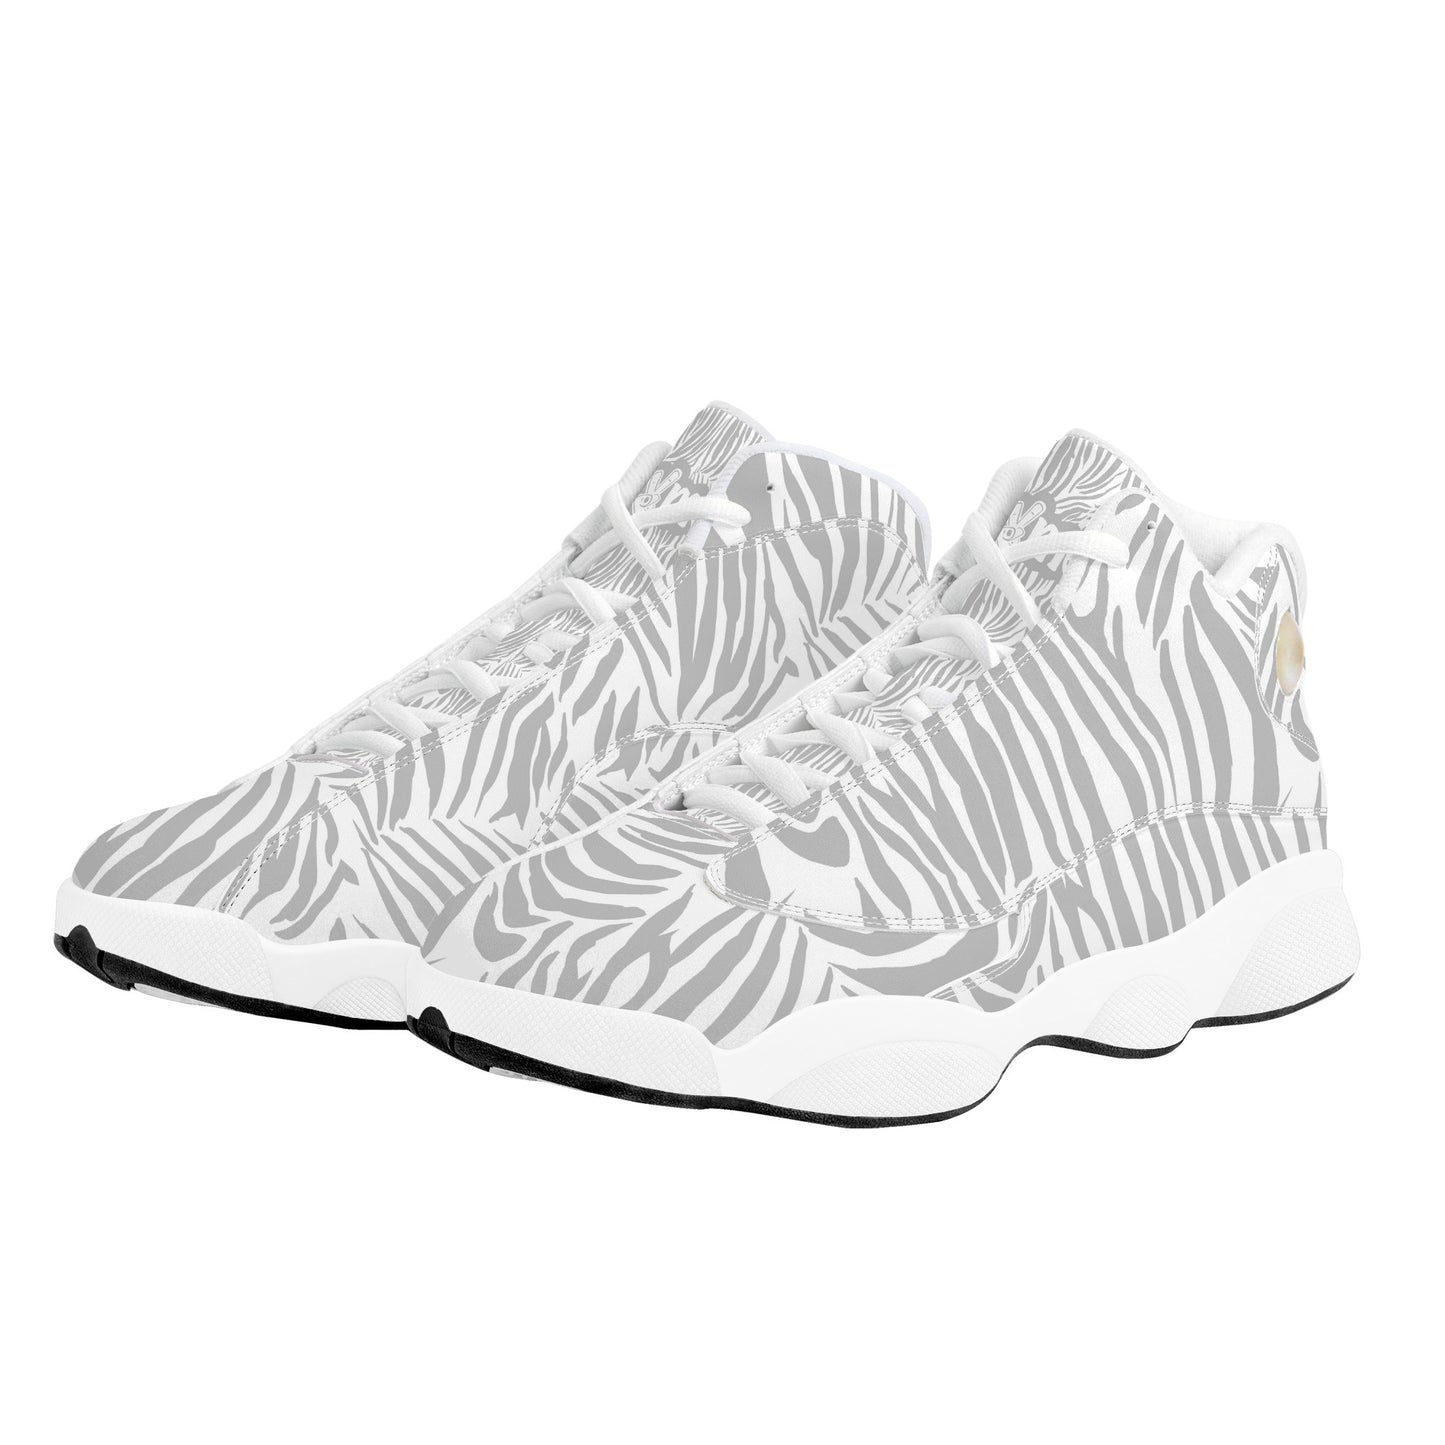 "Nix Zebra" Basketball Shoes